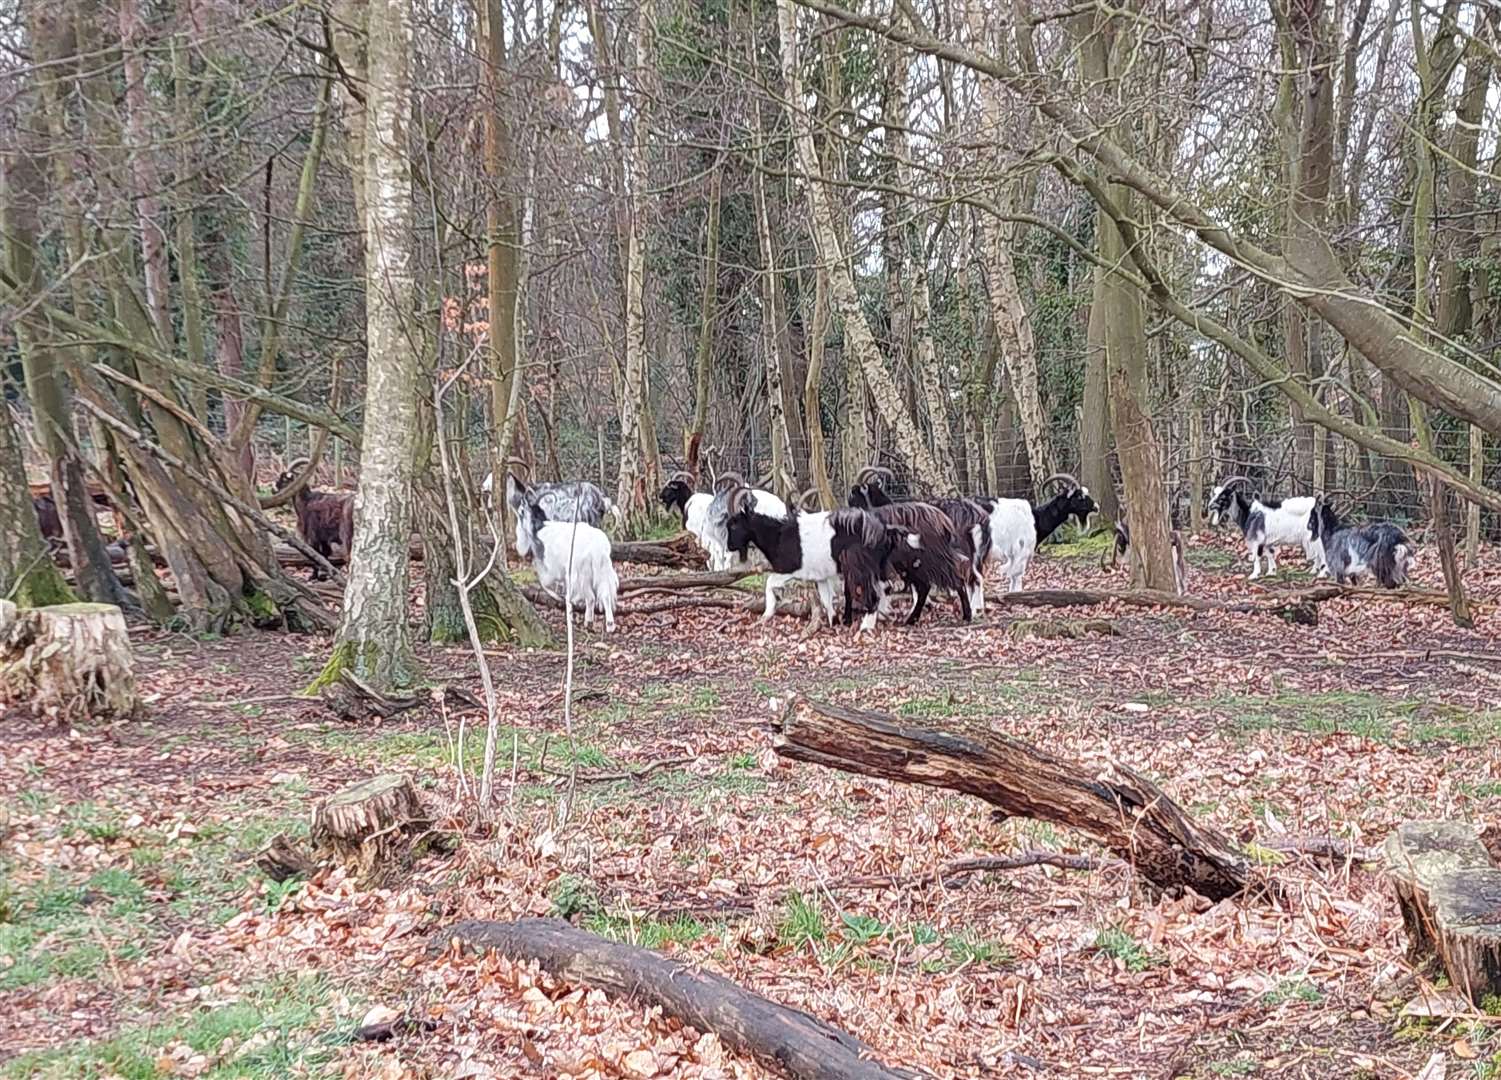 The goats grazing in Bigbury Wood at Chartham